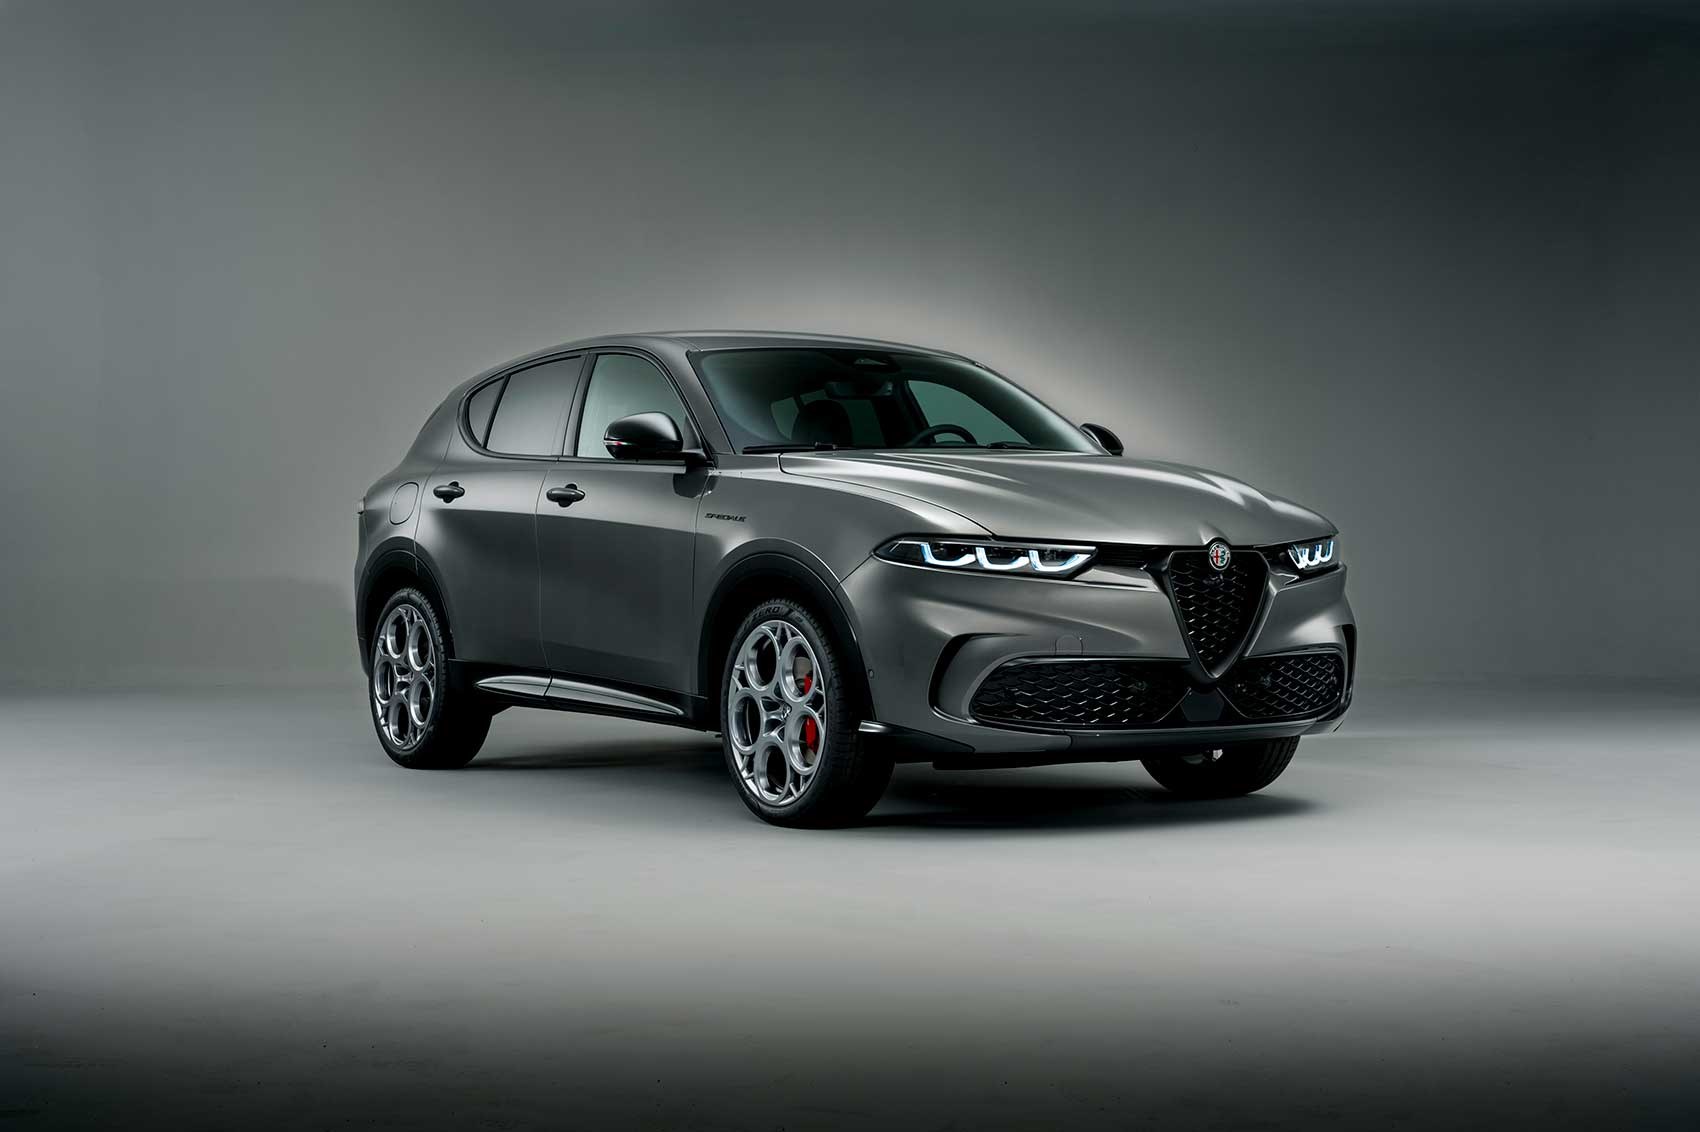 Alfa Romeo Giulietta: here's how the new model could look -   Global